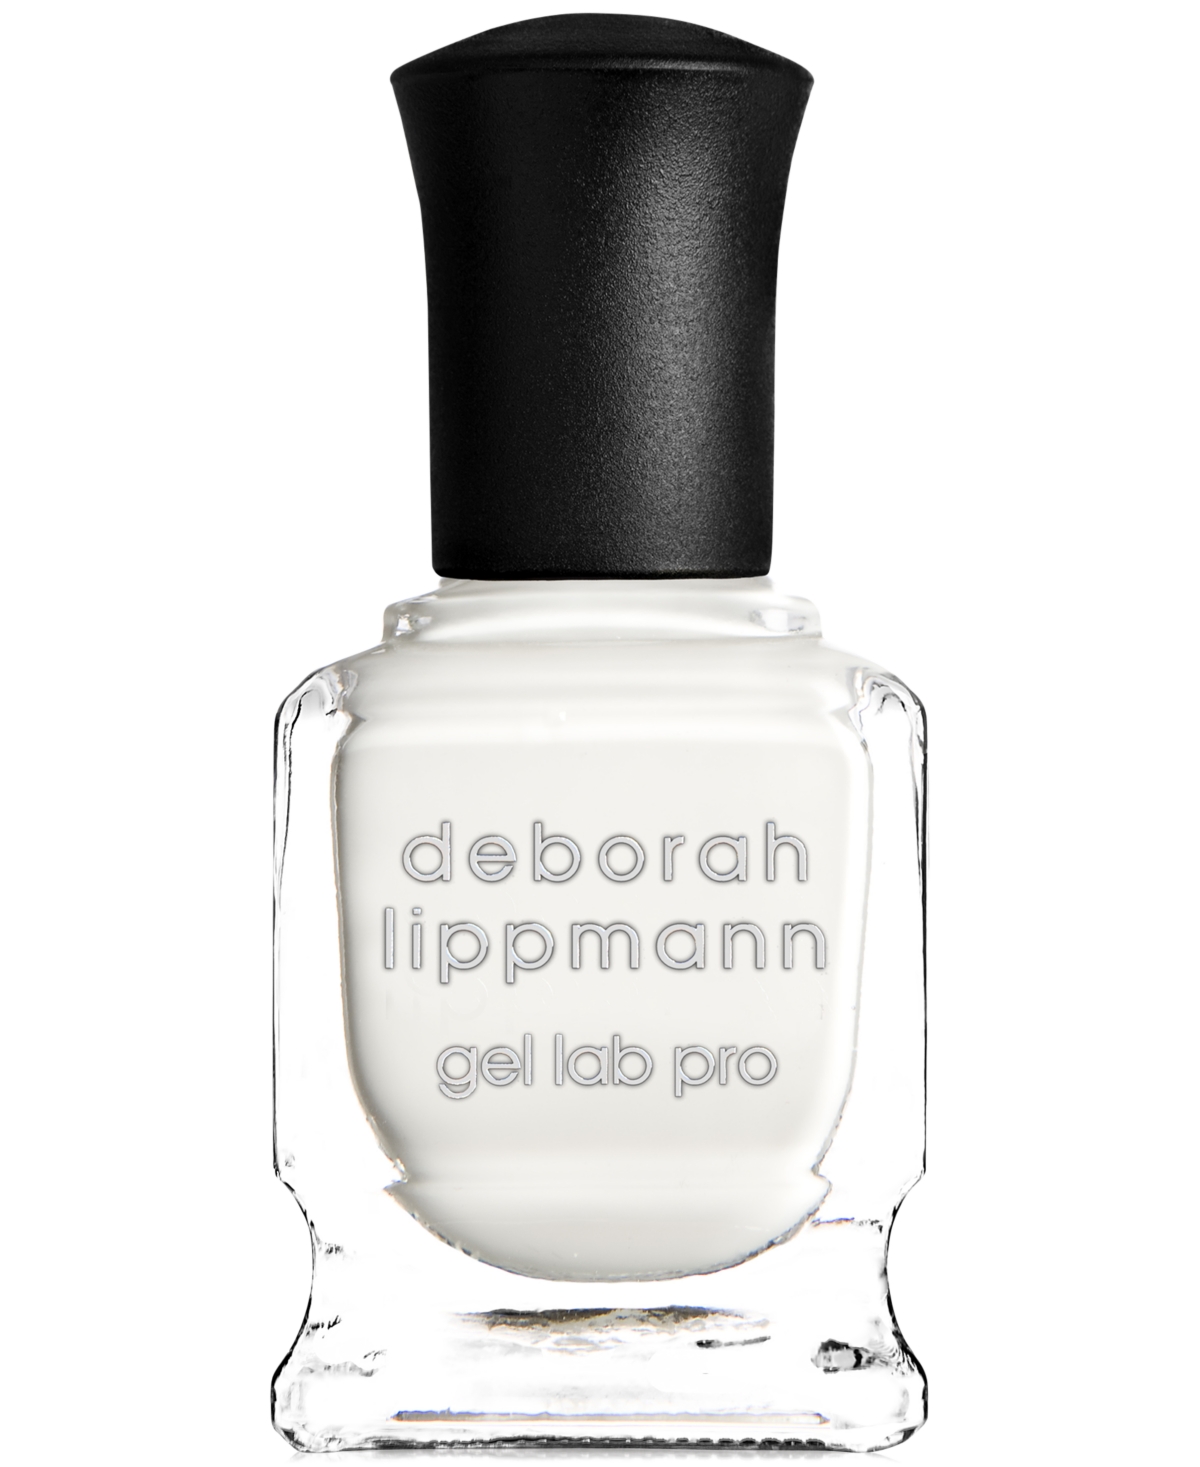 Deborah Lippmann Gel Lab Pro Nail Polish